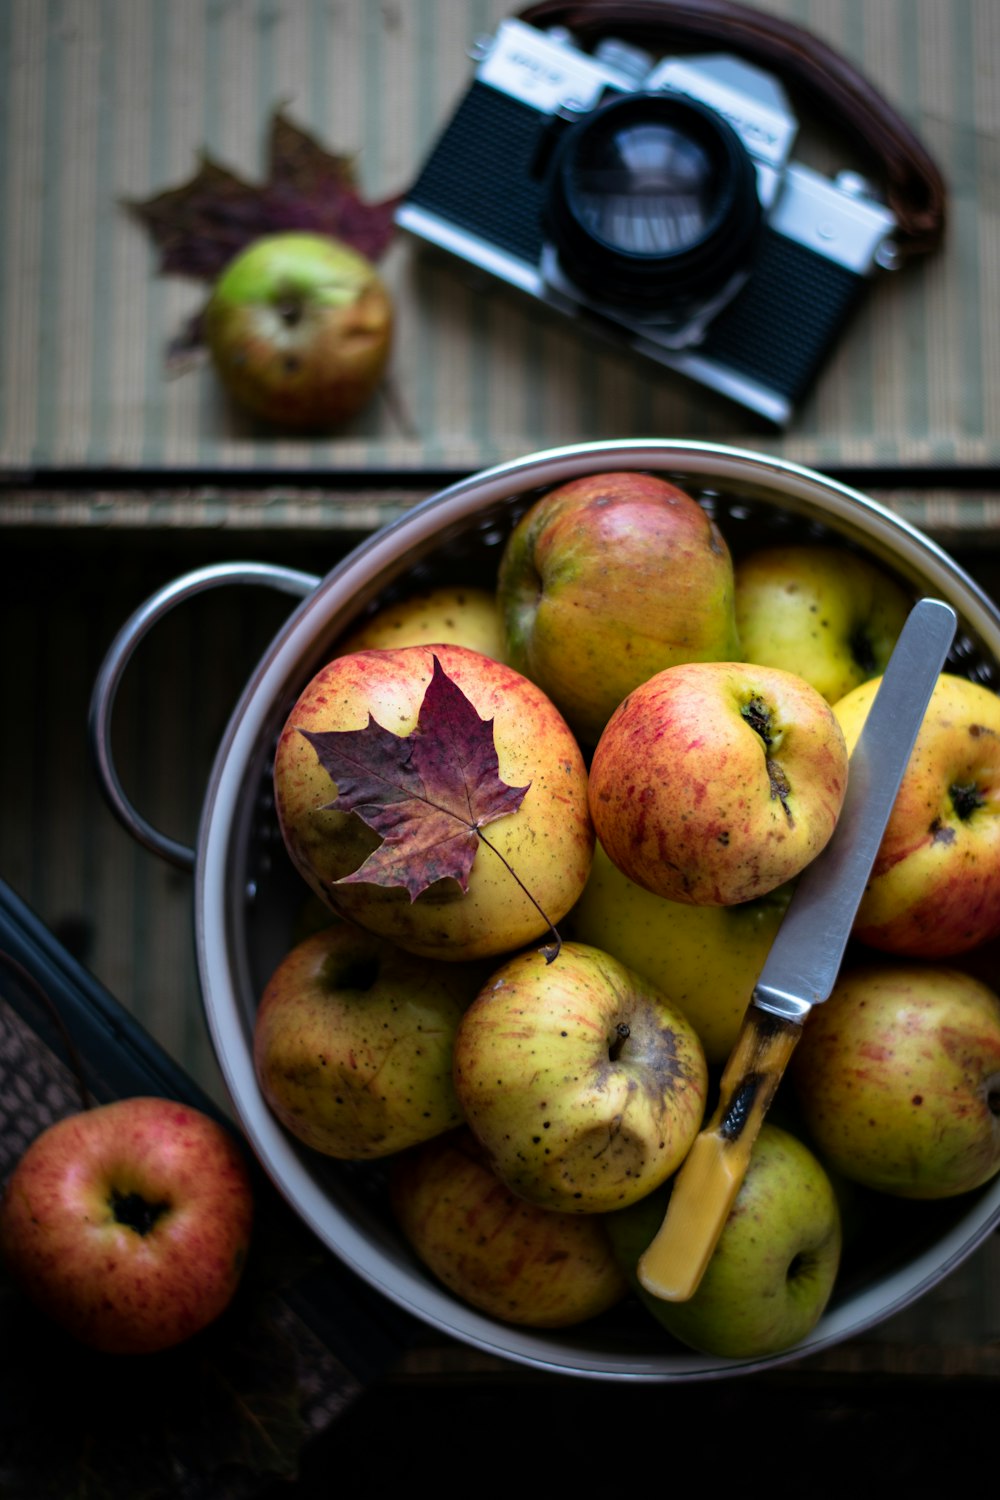 Fotografia plana de pote de maçãs